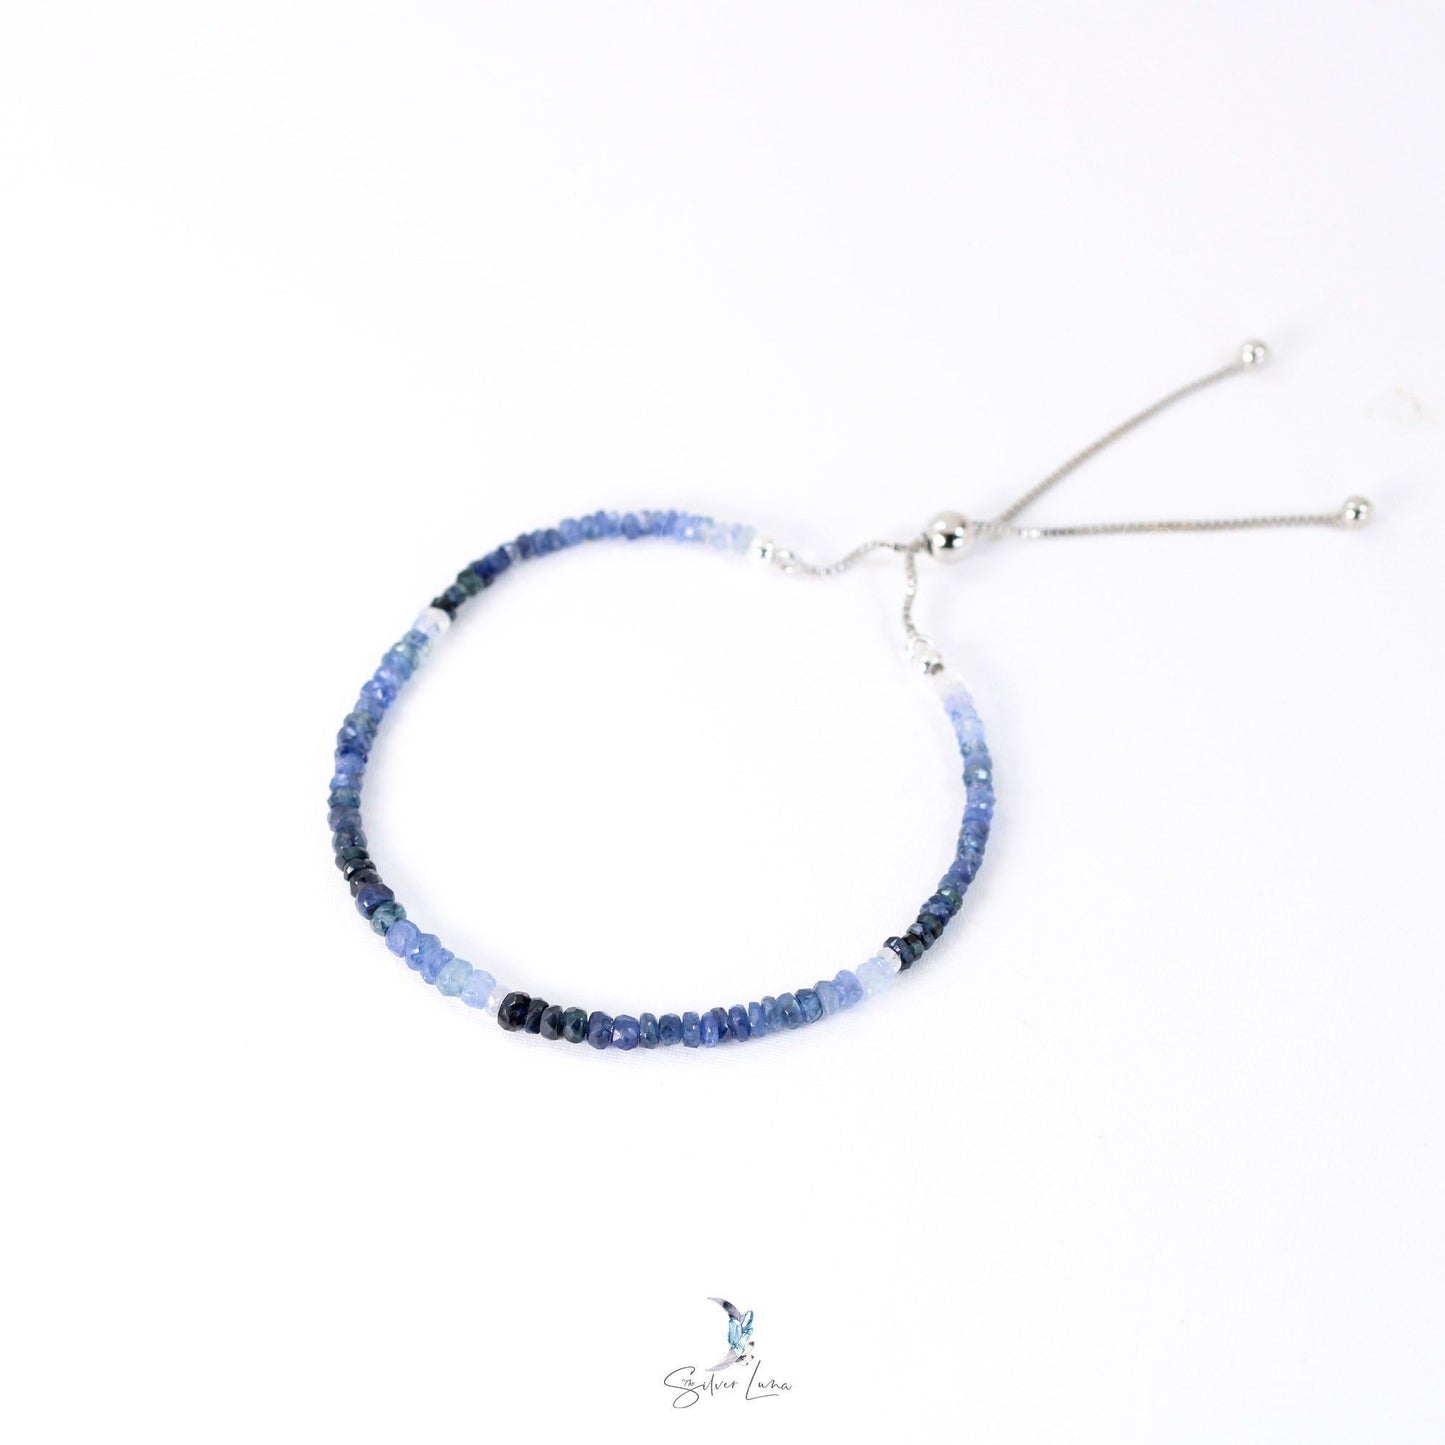 blue sapphire gemstone bracelet